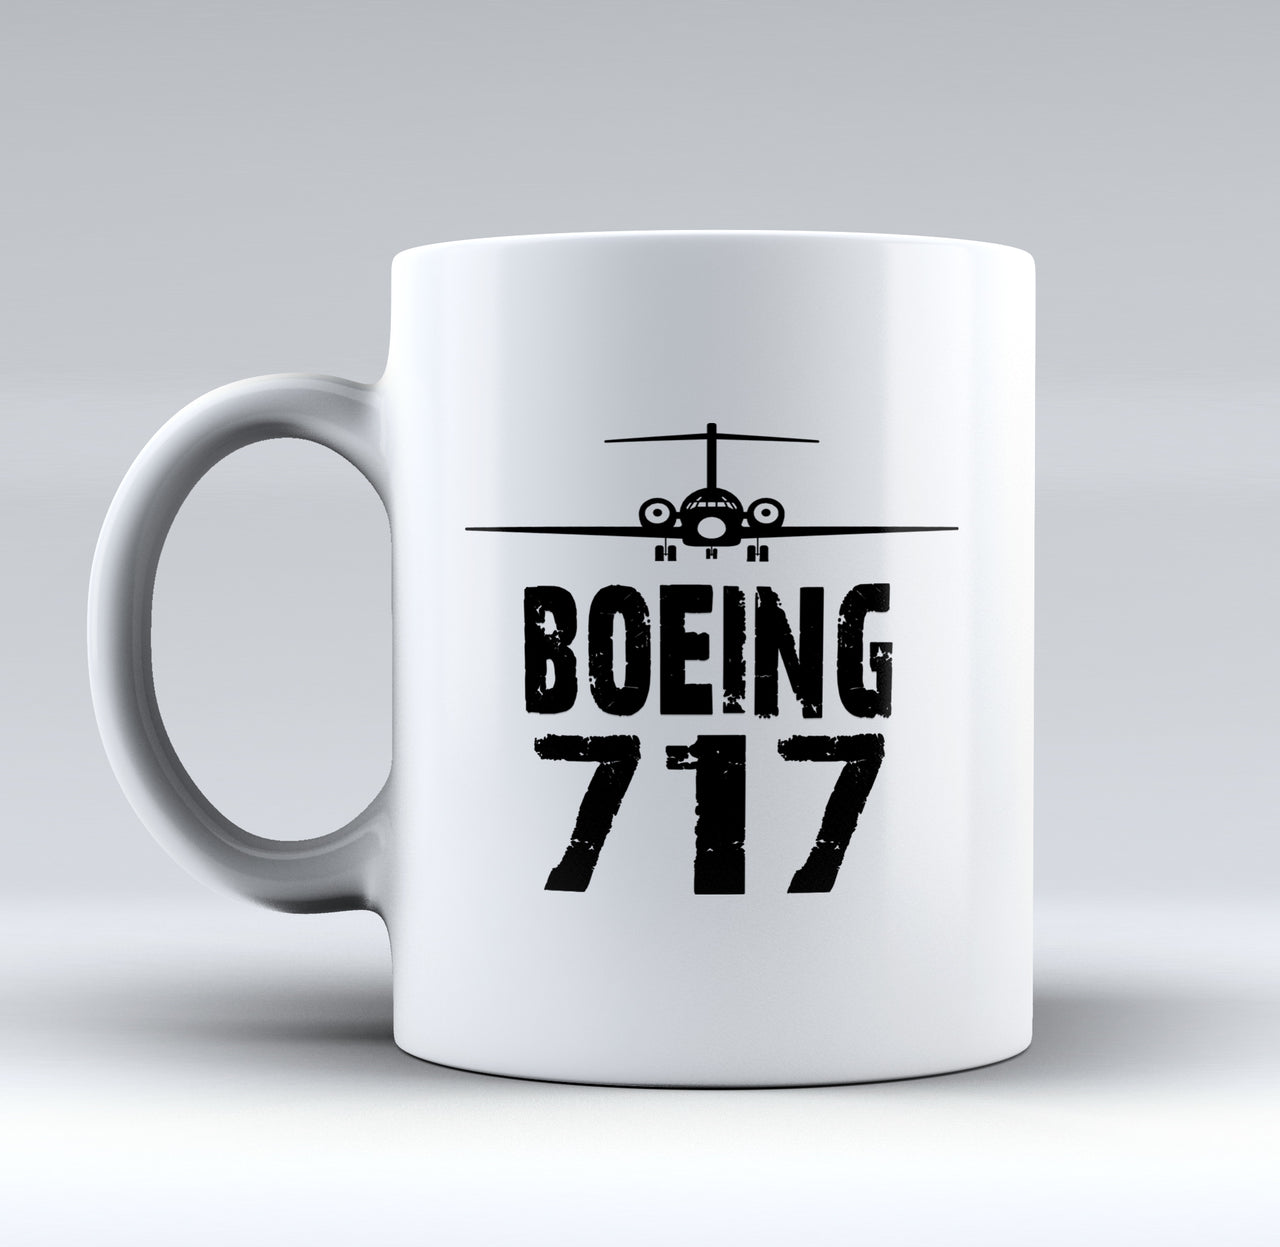 Boeing 717 & Plane Designed Mugs